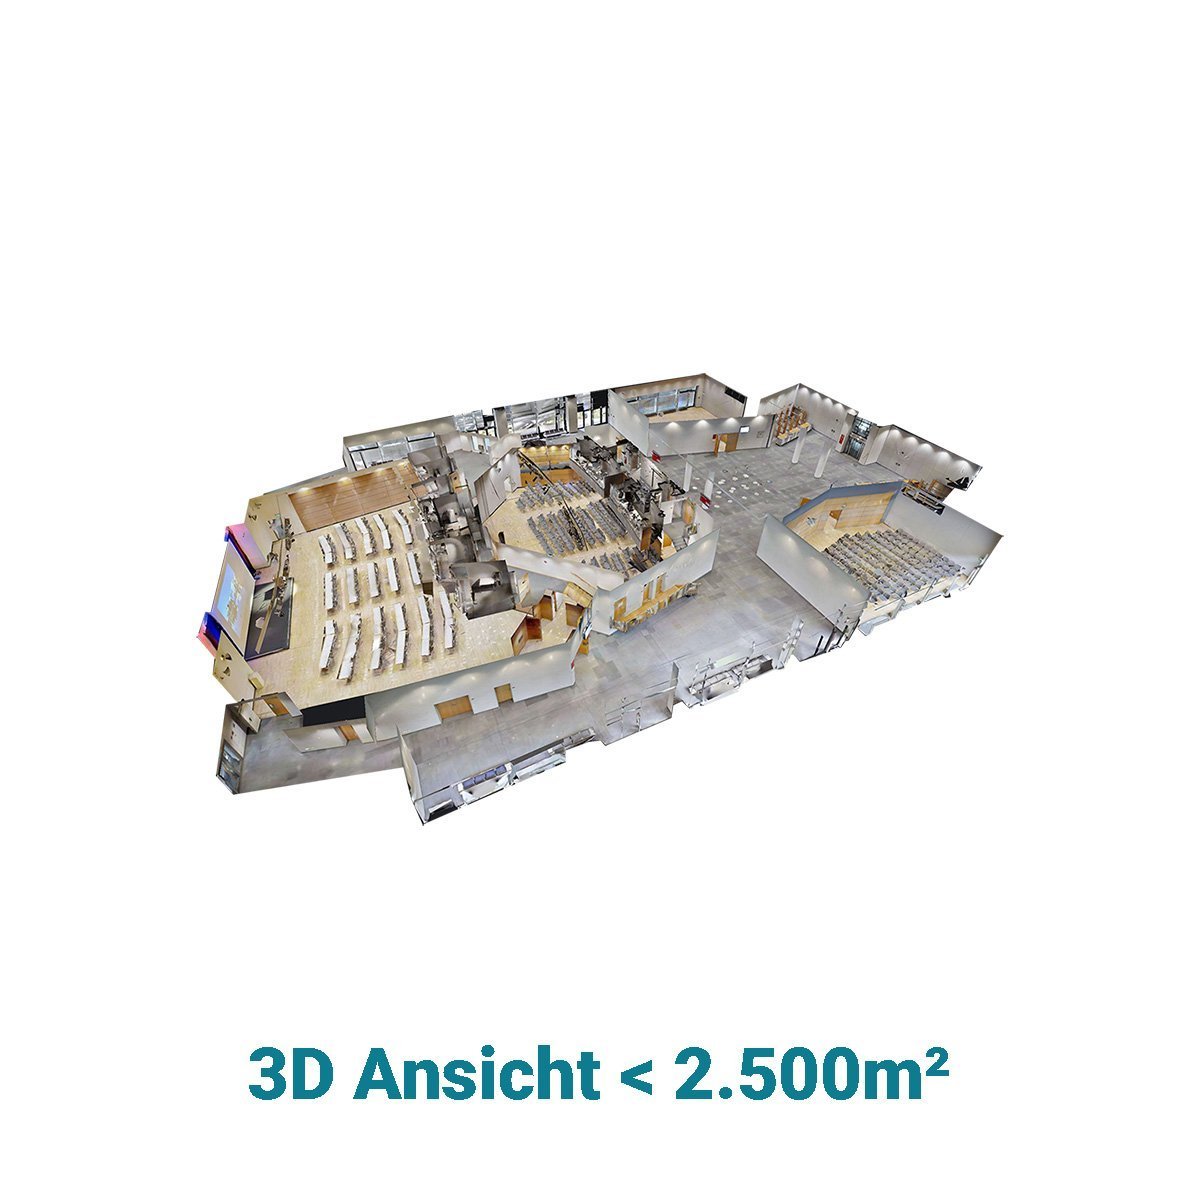 3D Tour Scan | Matterport Pro2 - MESH IMAGES BERLIN MESH IMAGES BERLIN Services